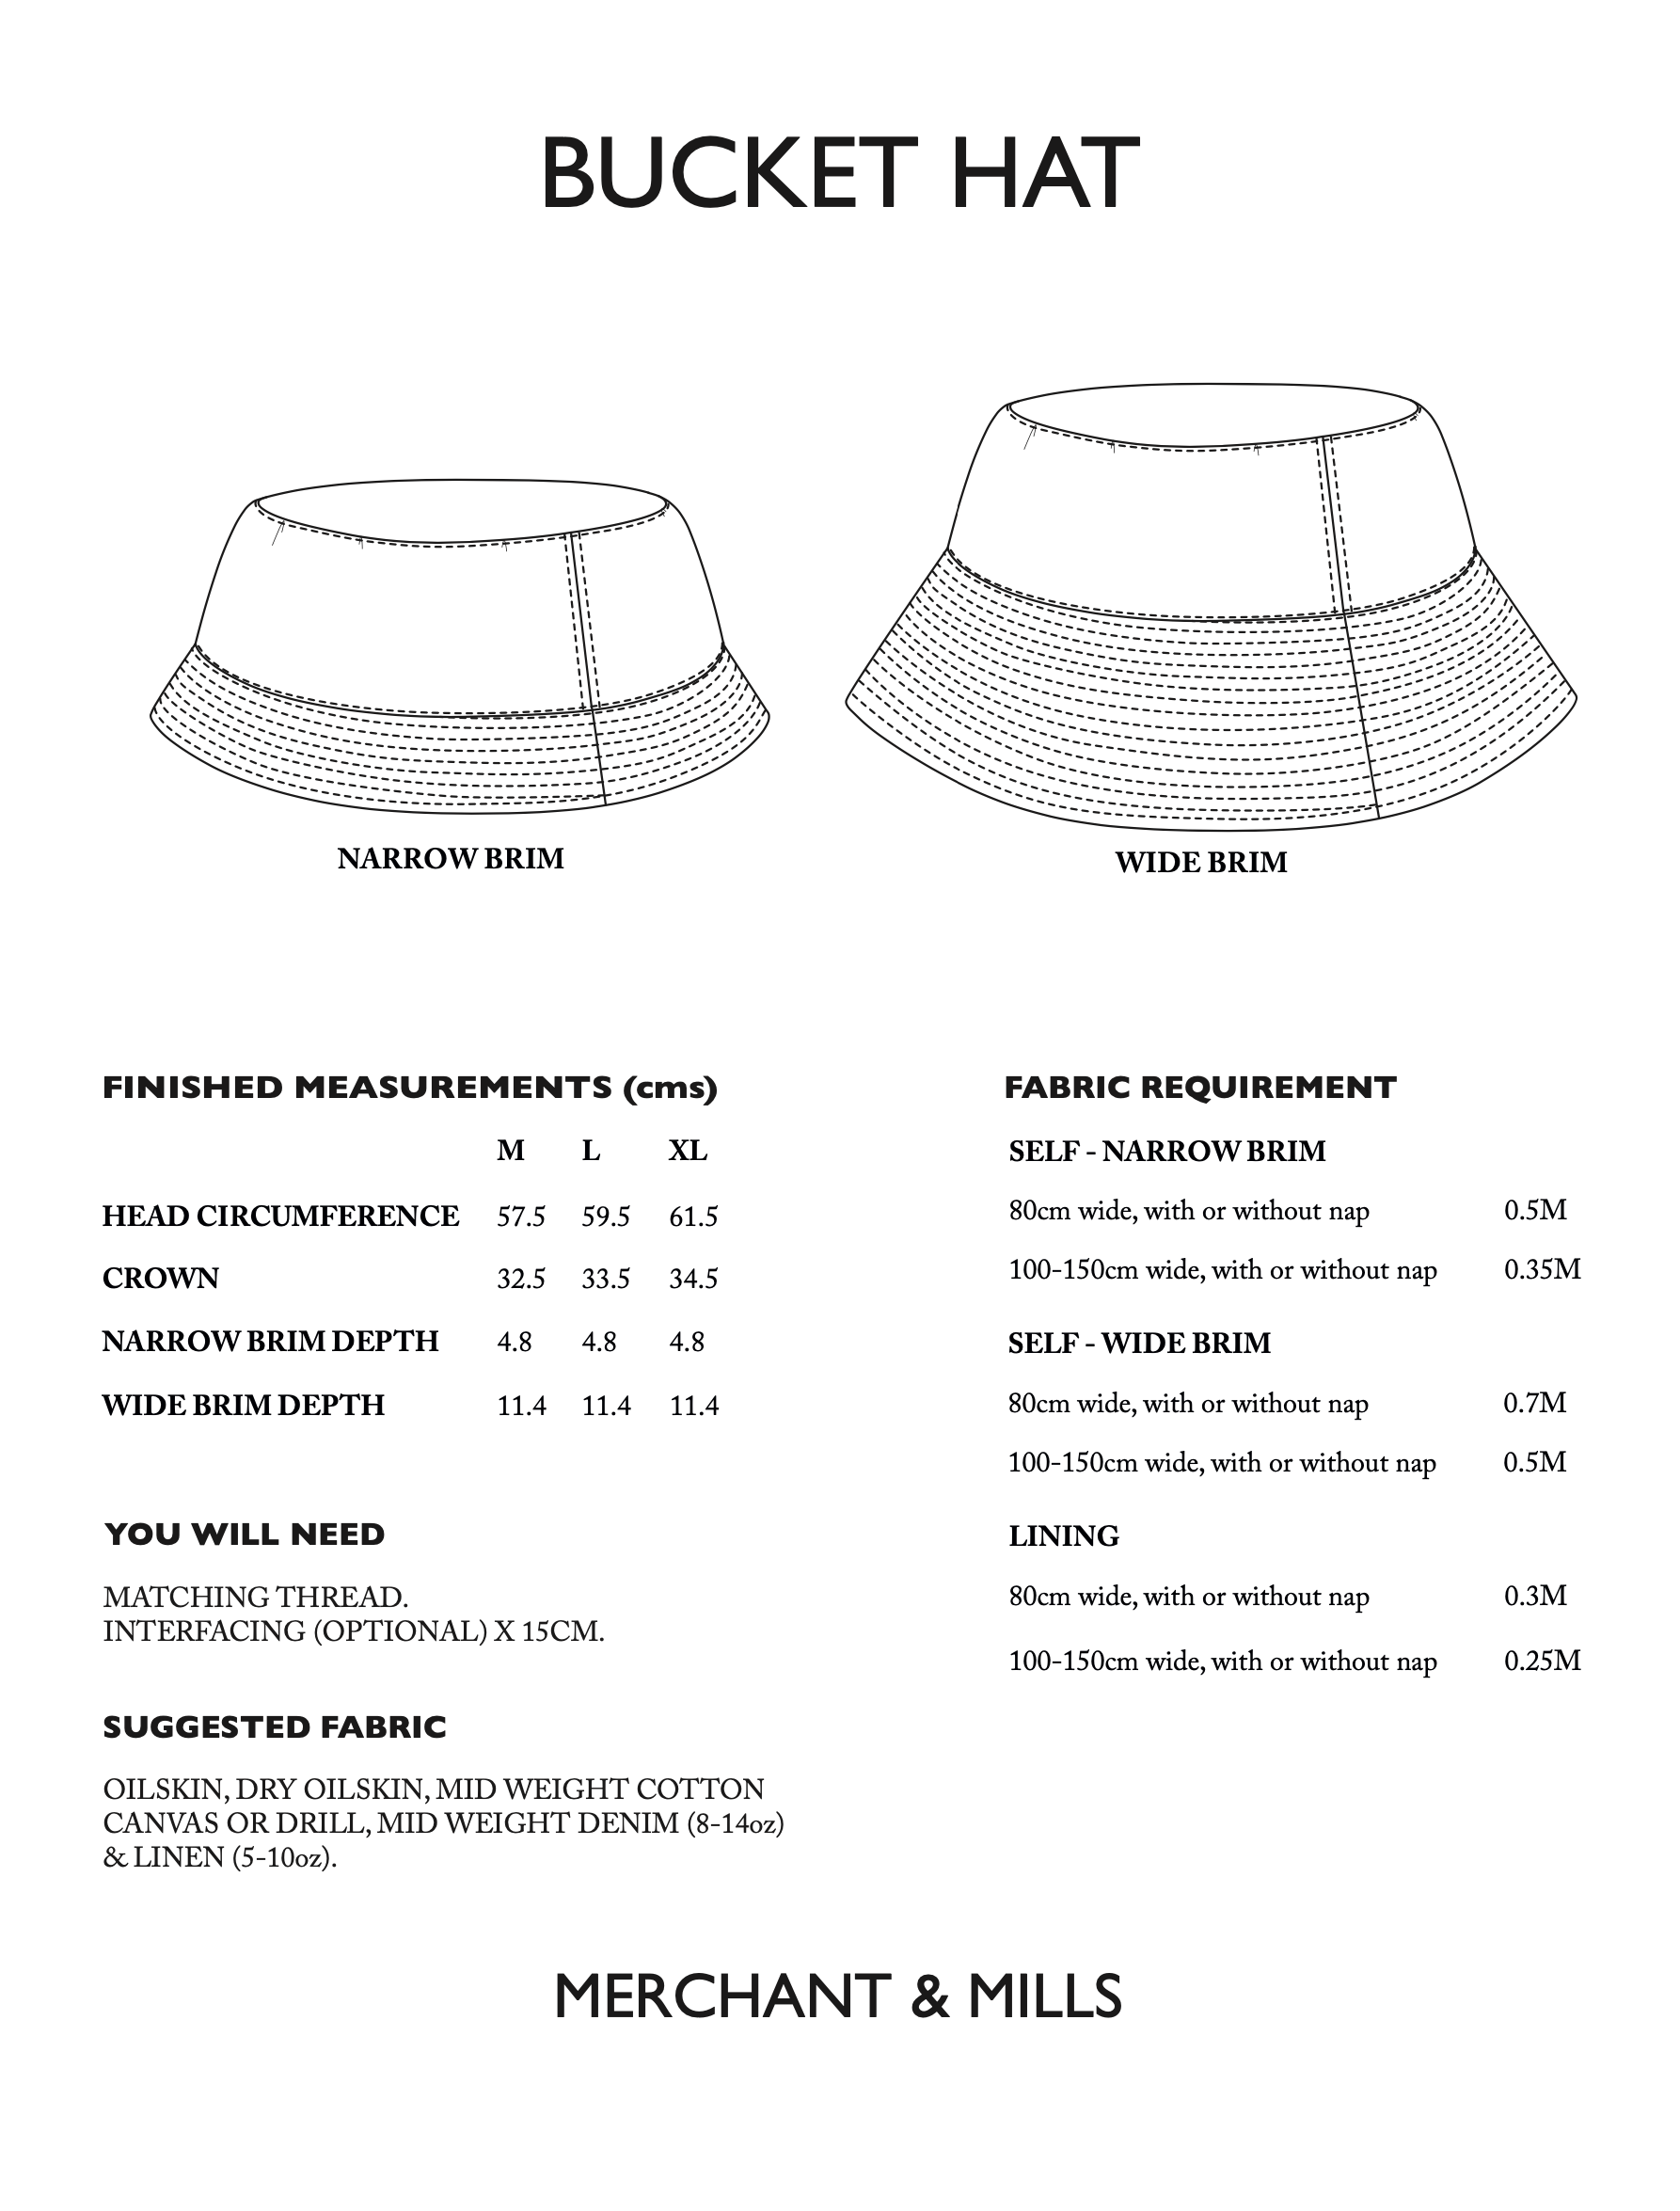 Merchant & Mills Bucket Hat PDF (free)